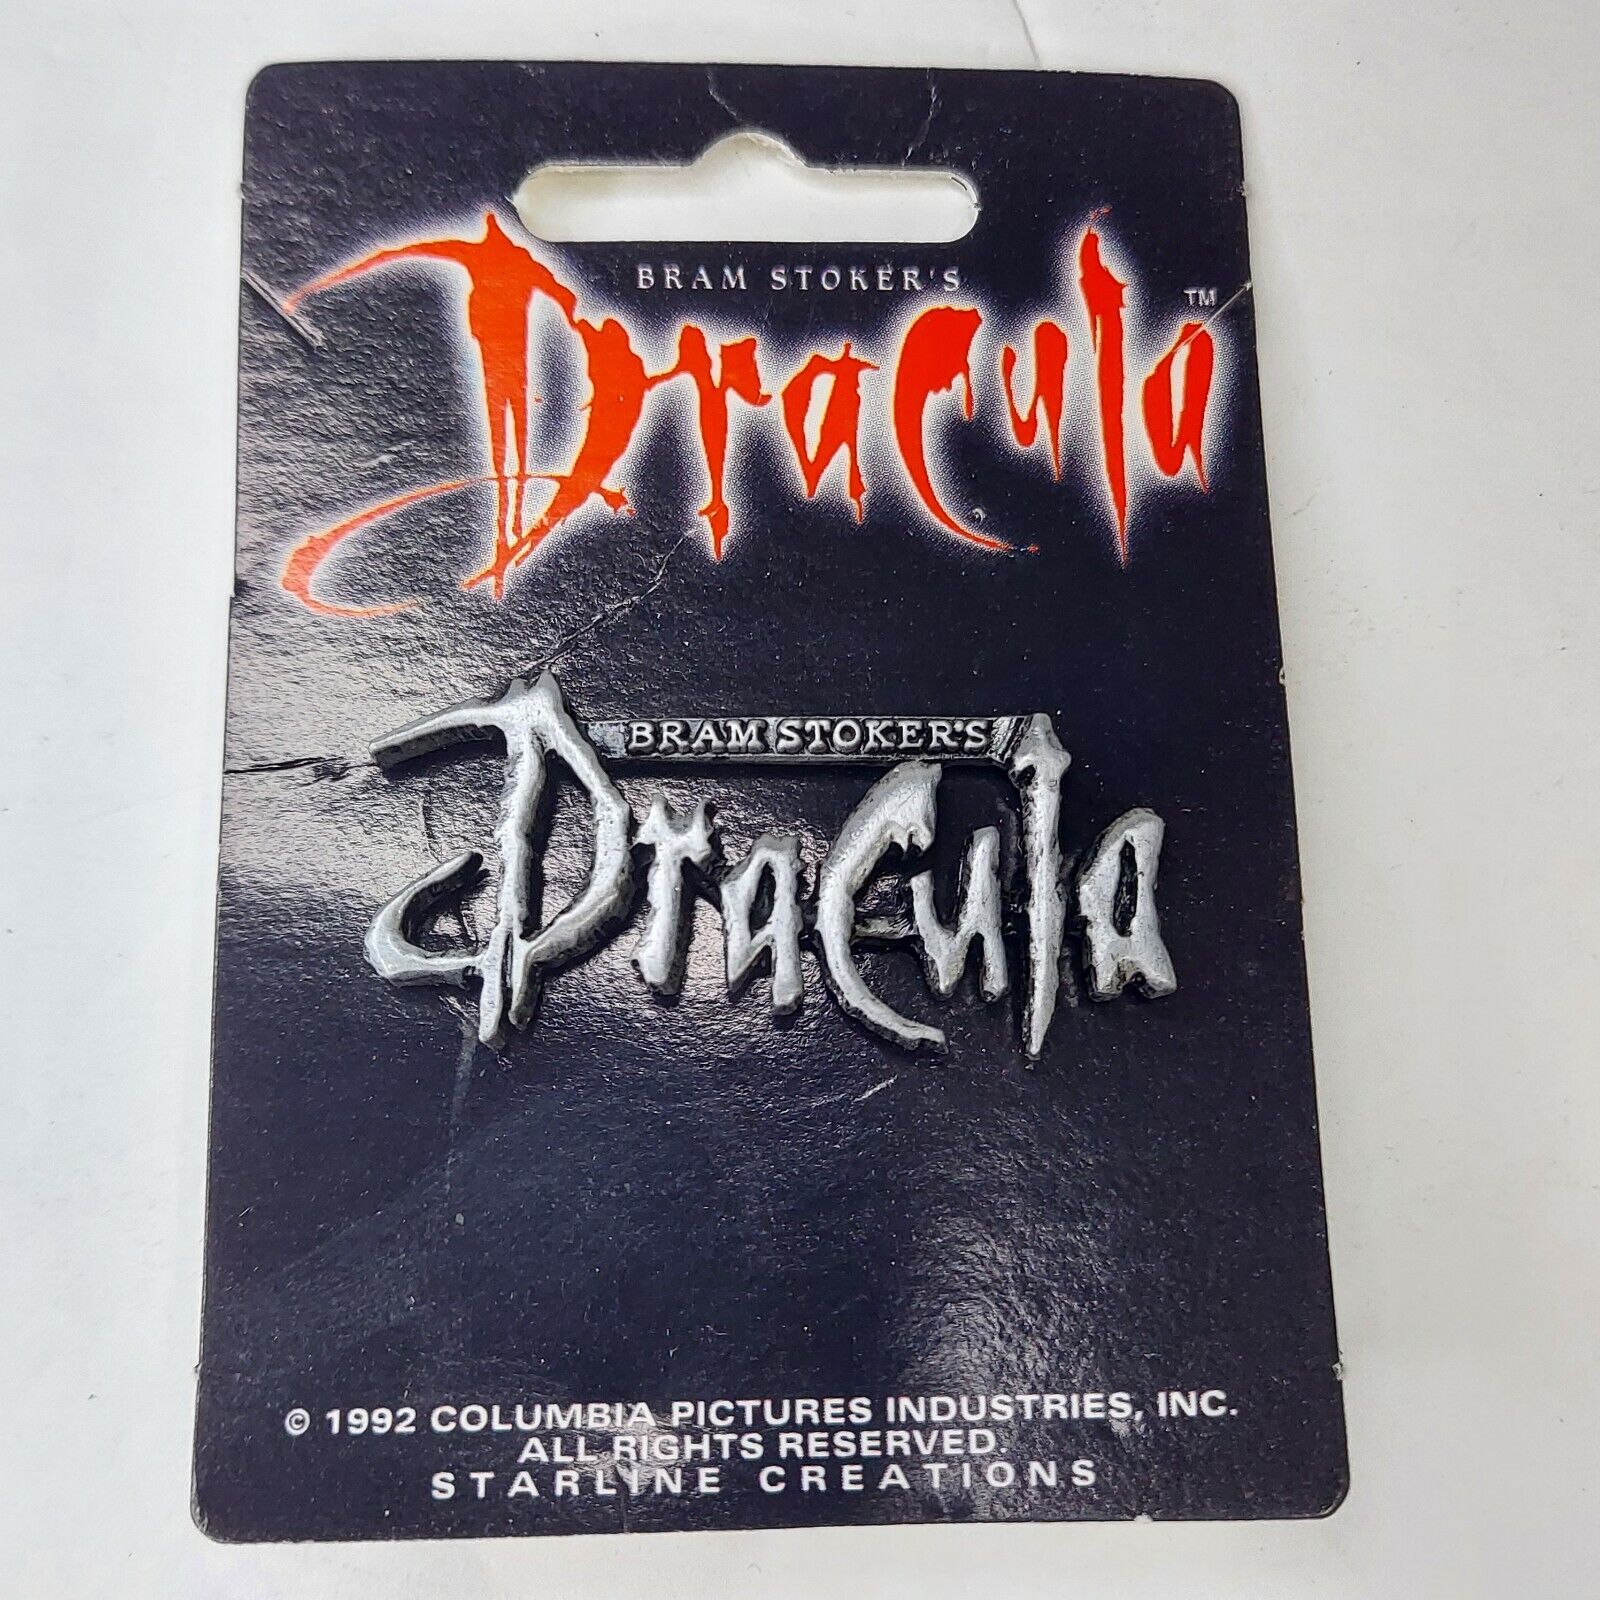 Vintage 1992 Bram Stoker's Dracula Title Pin Vampire Horror Starline Creations